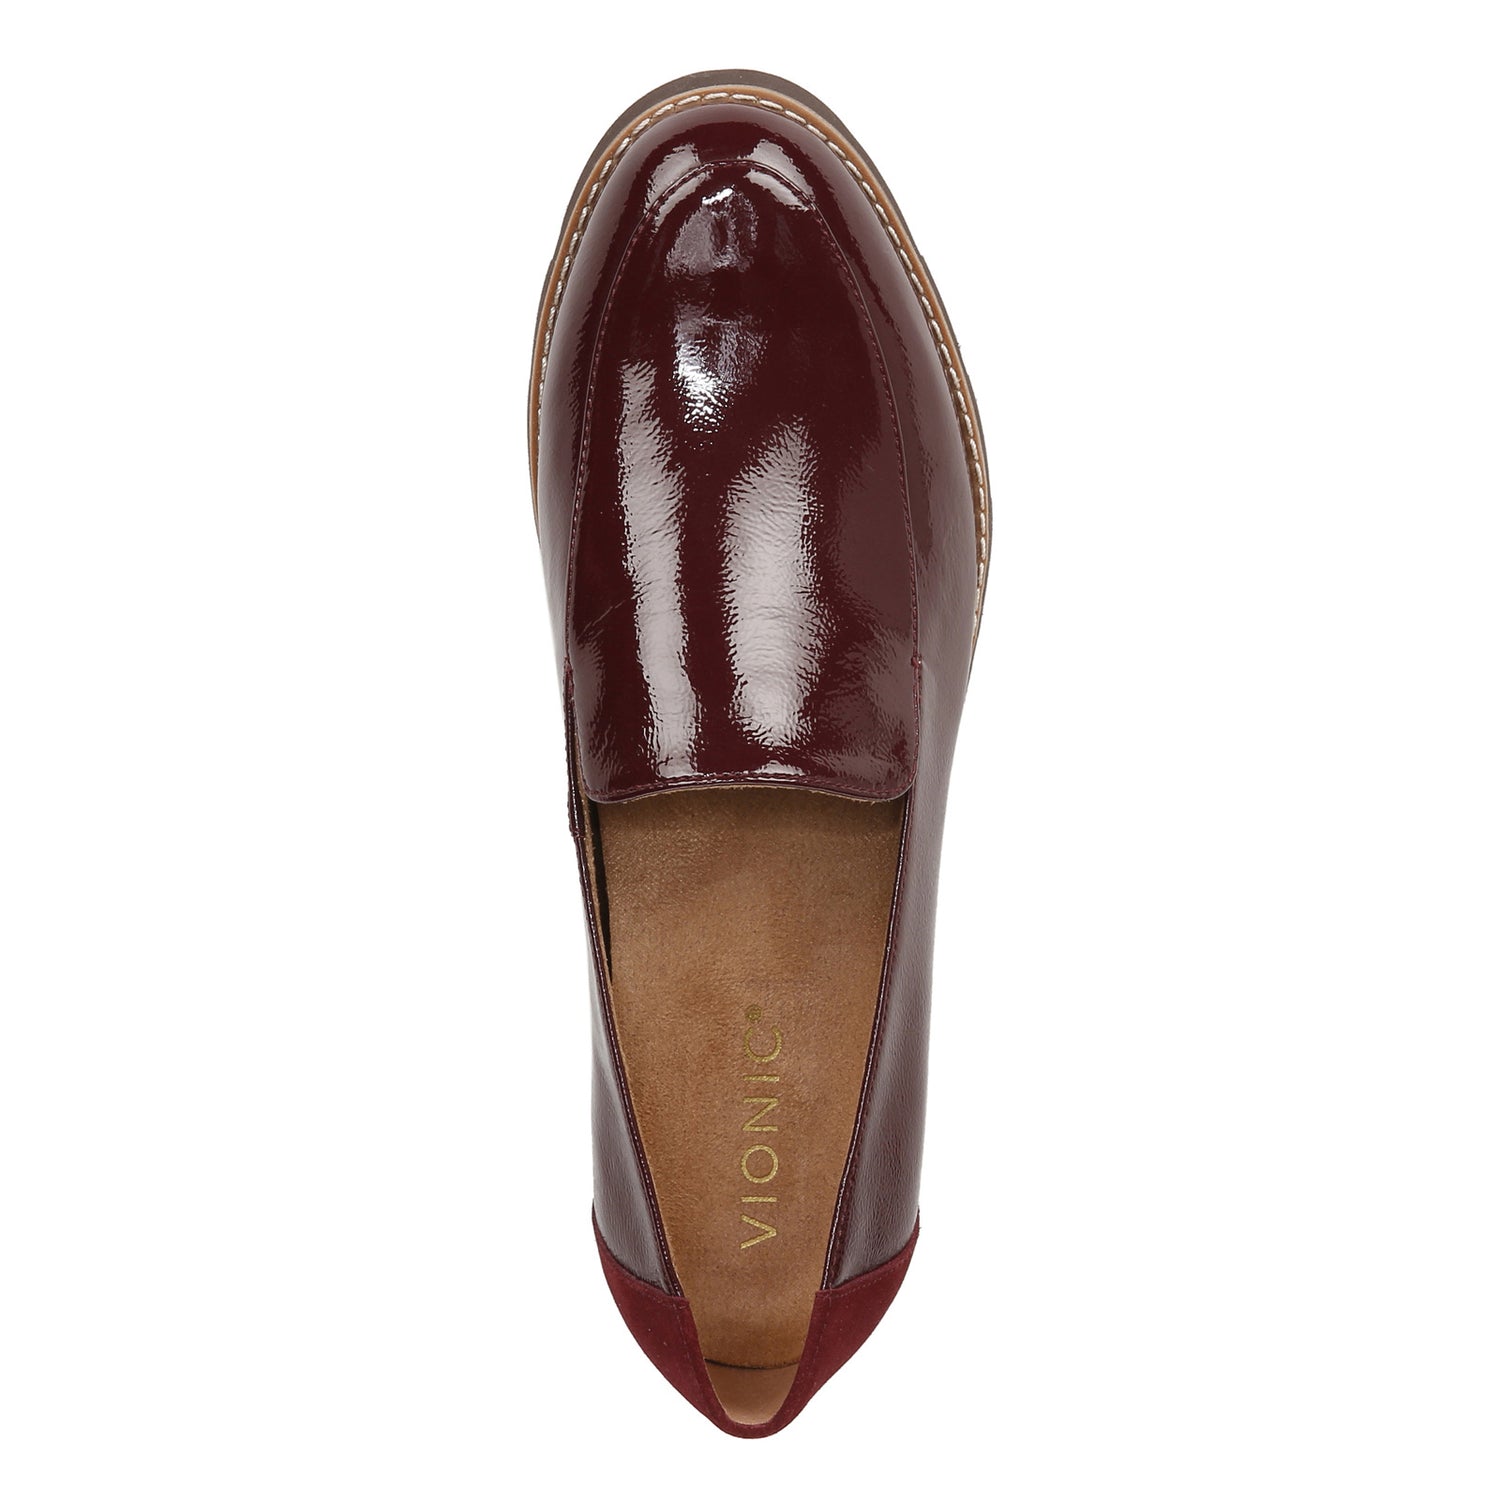 Peltz Shoes  Women's Vionic Kensley Loafer Burgundy Patent Leather H9623L2600